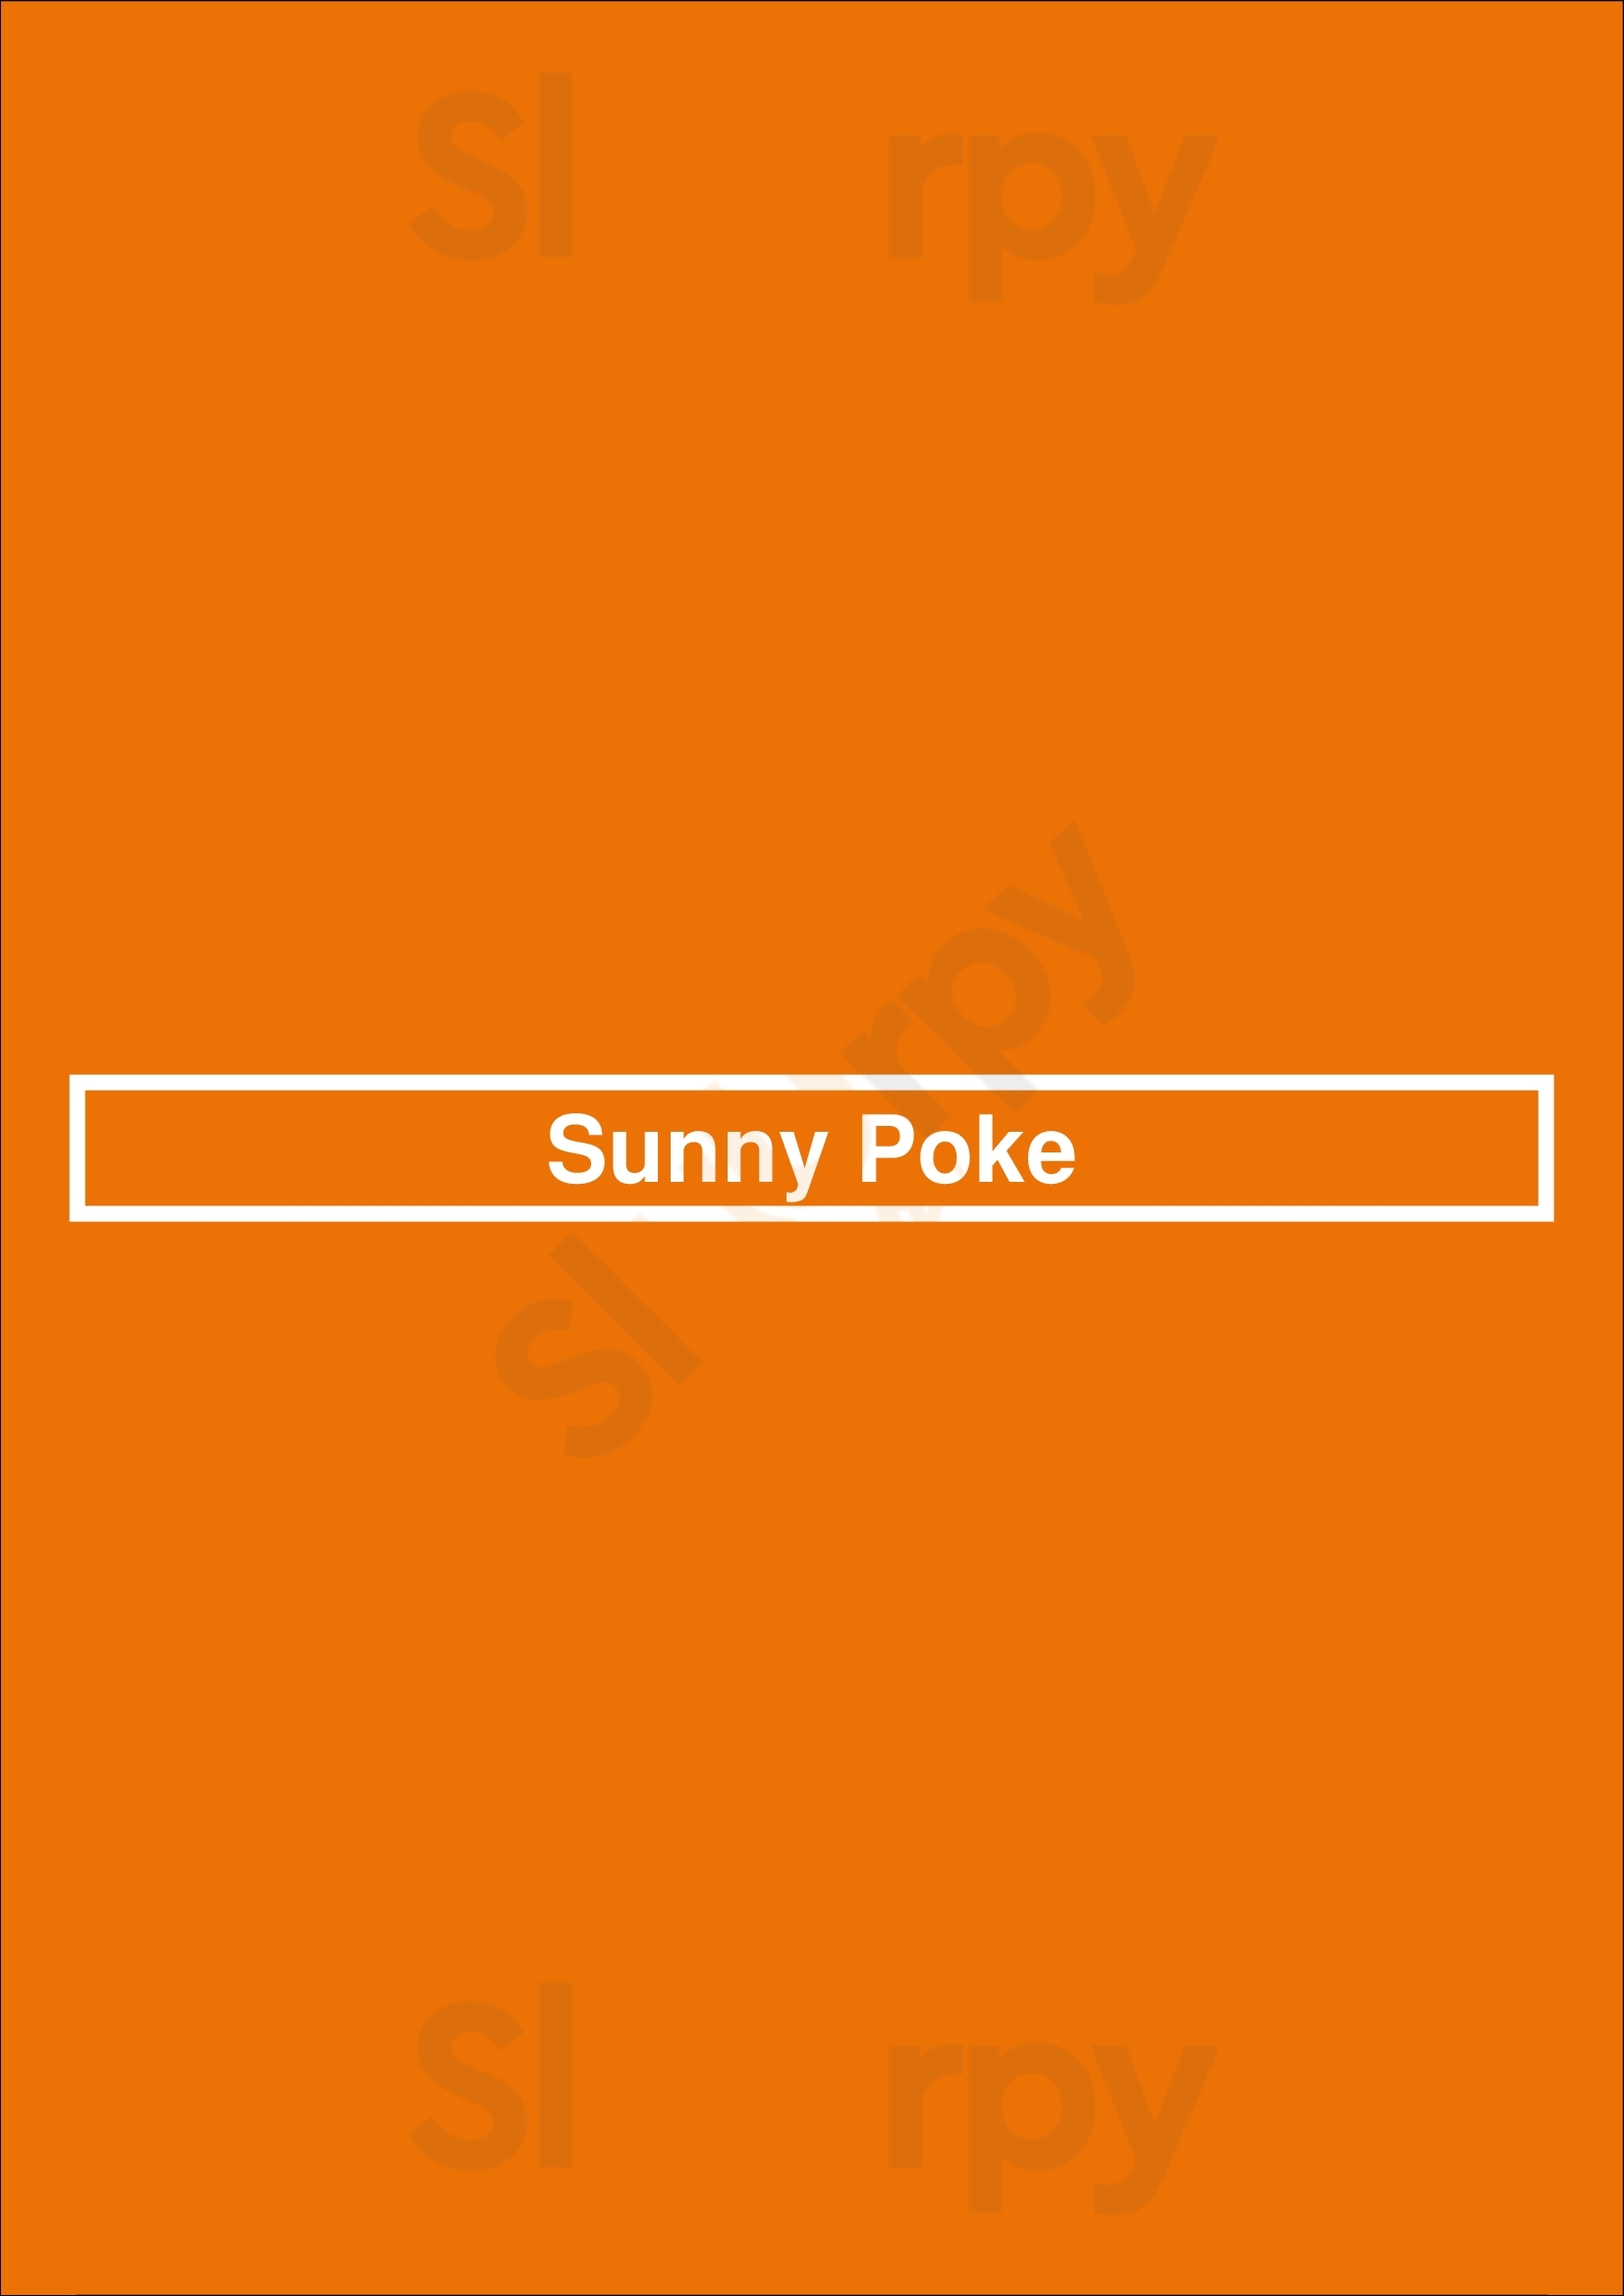 Sunny Poke Miami Beach Menu - 1